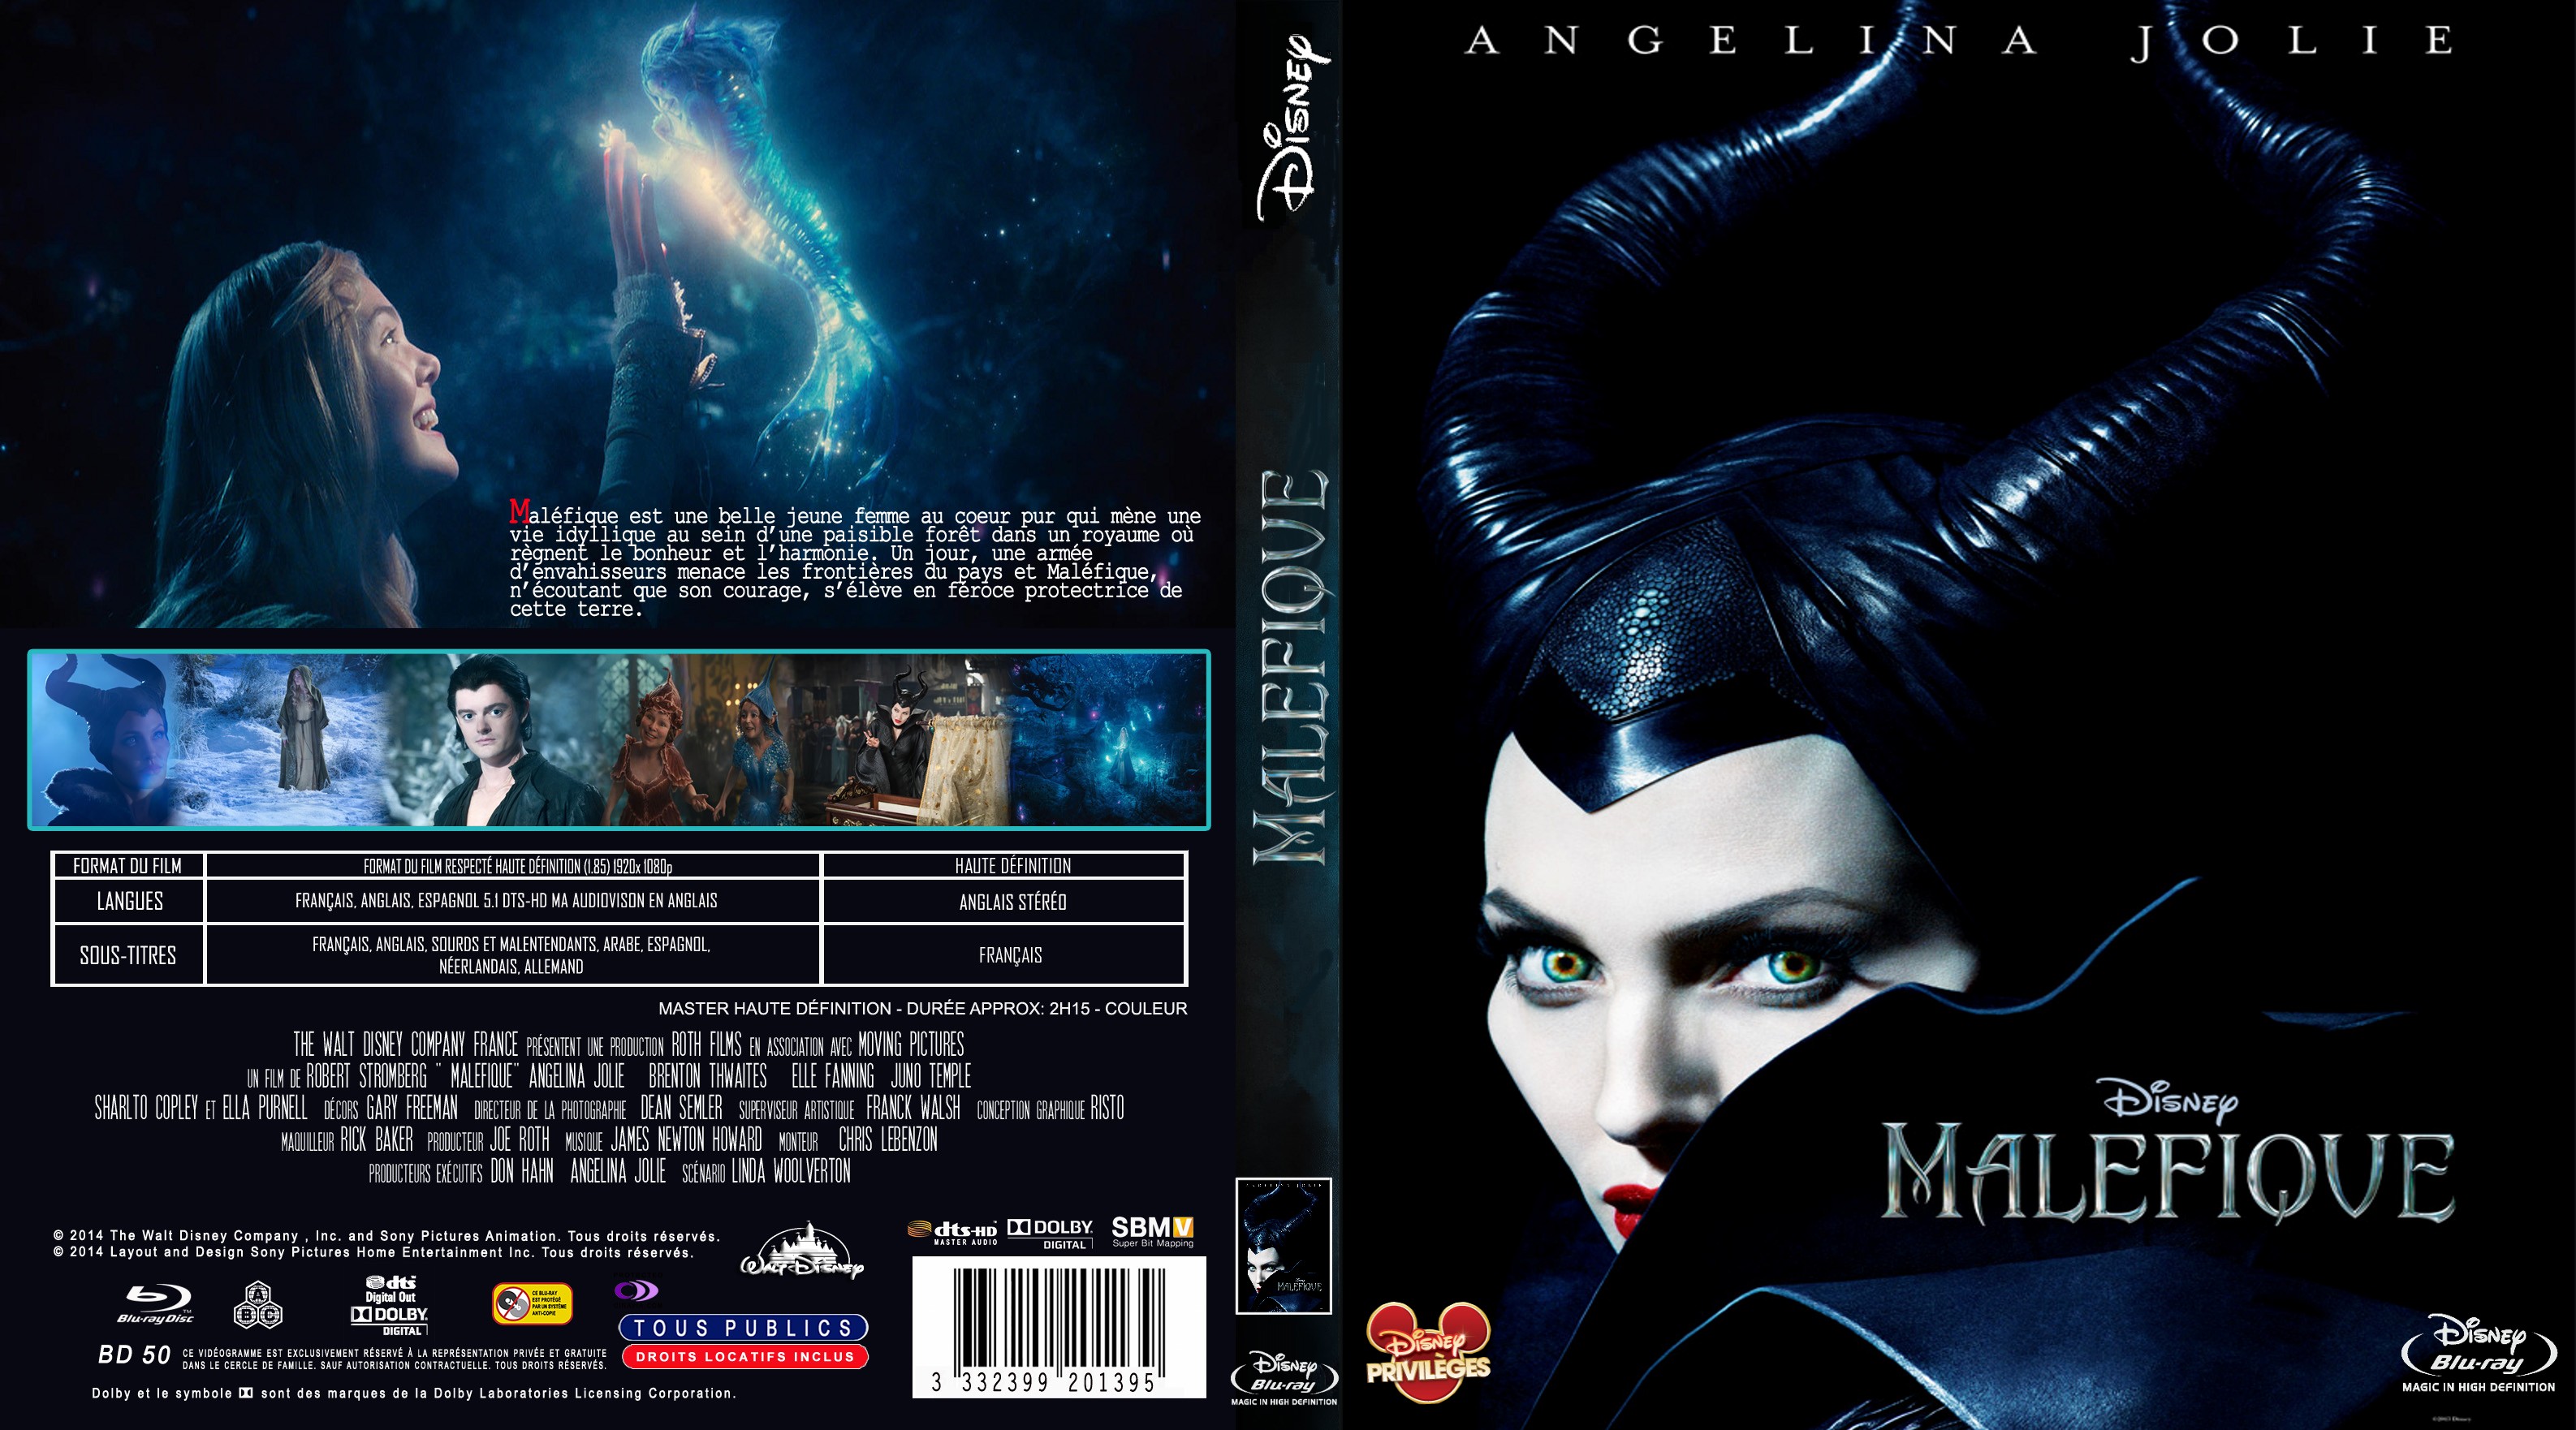 Jaquette DVD Malefique (2014) custom (BLU-RAY) v2